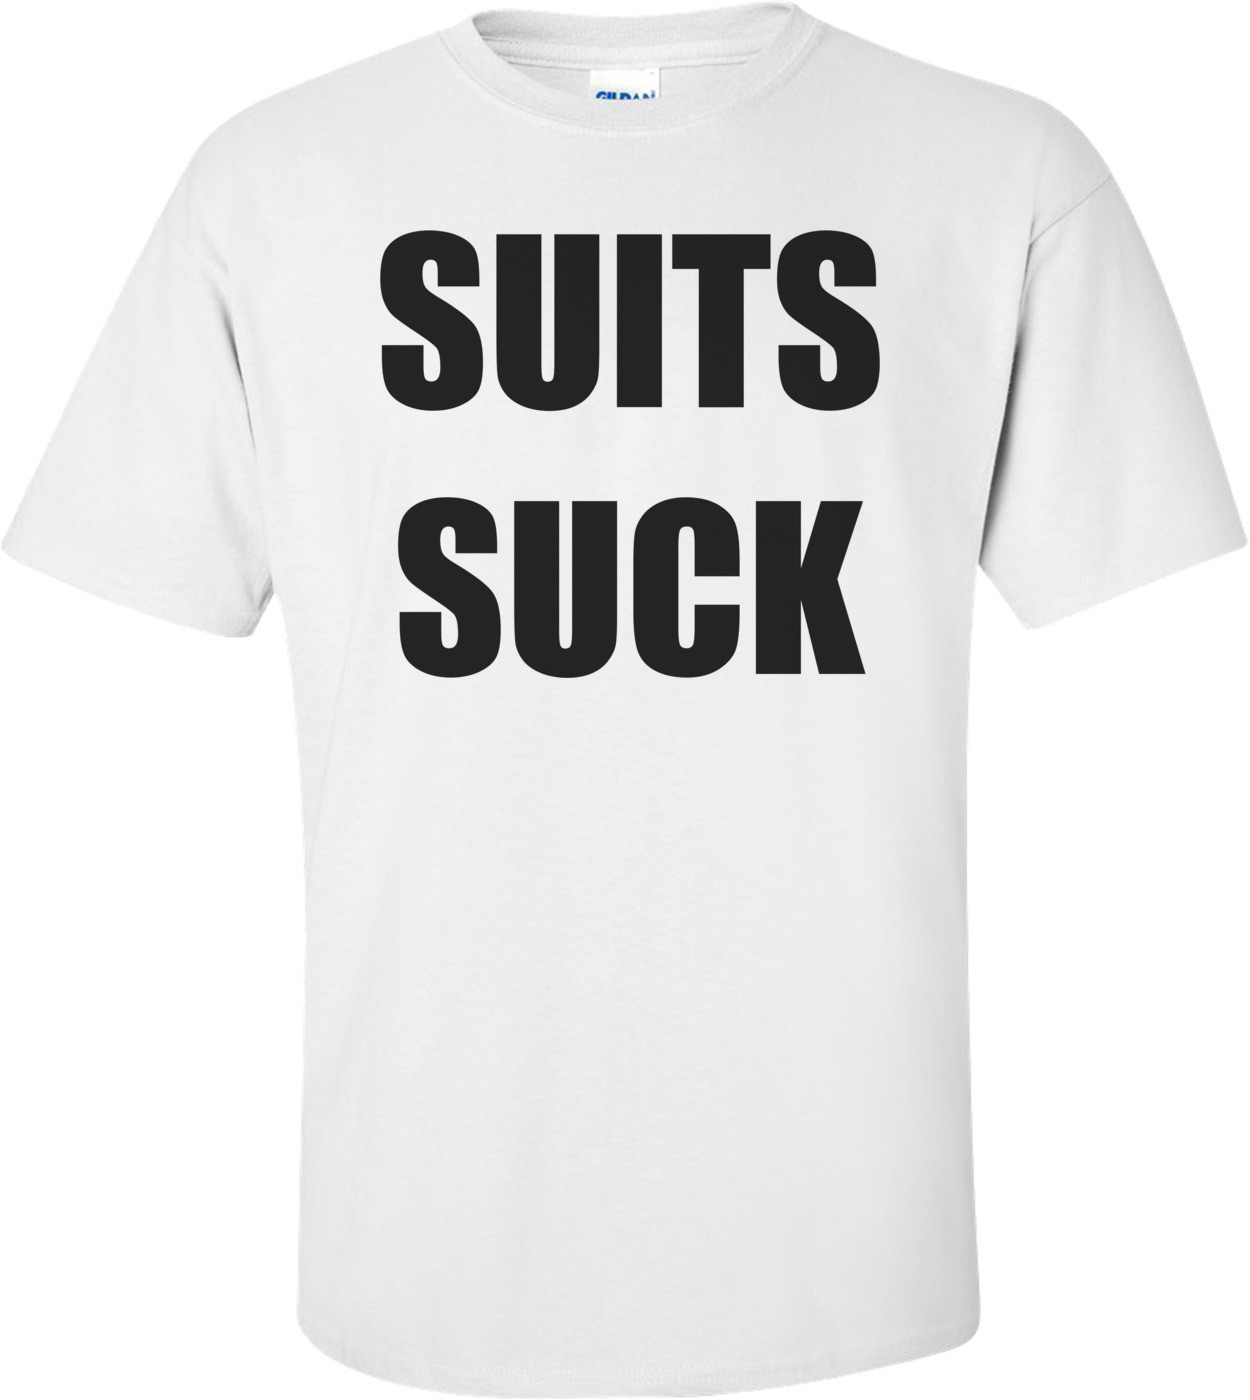 SUITS SUCK Shirt